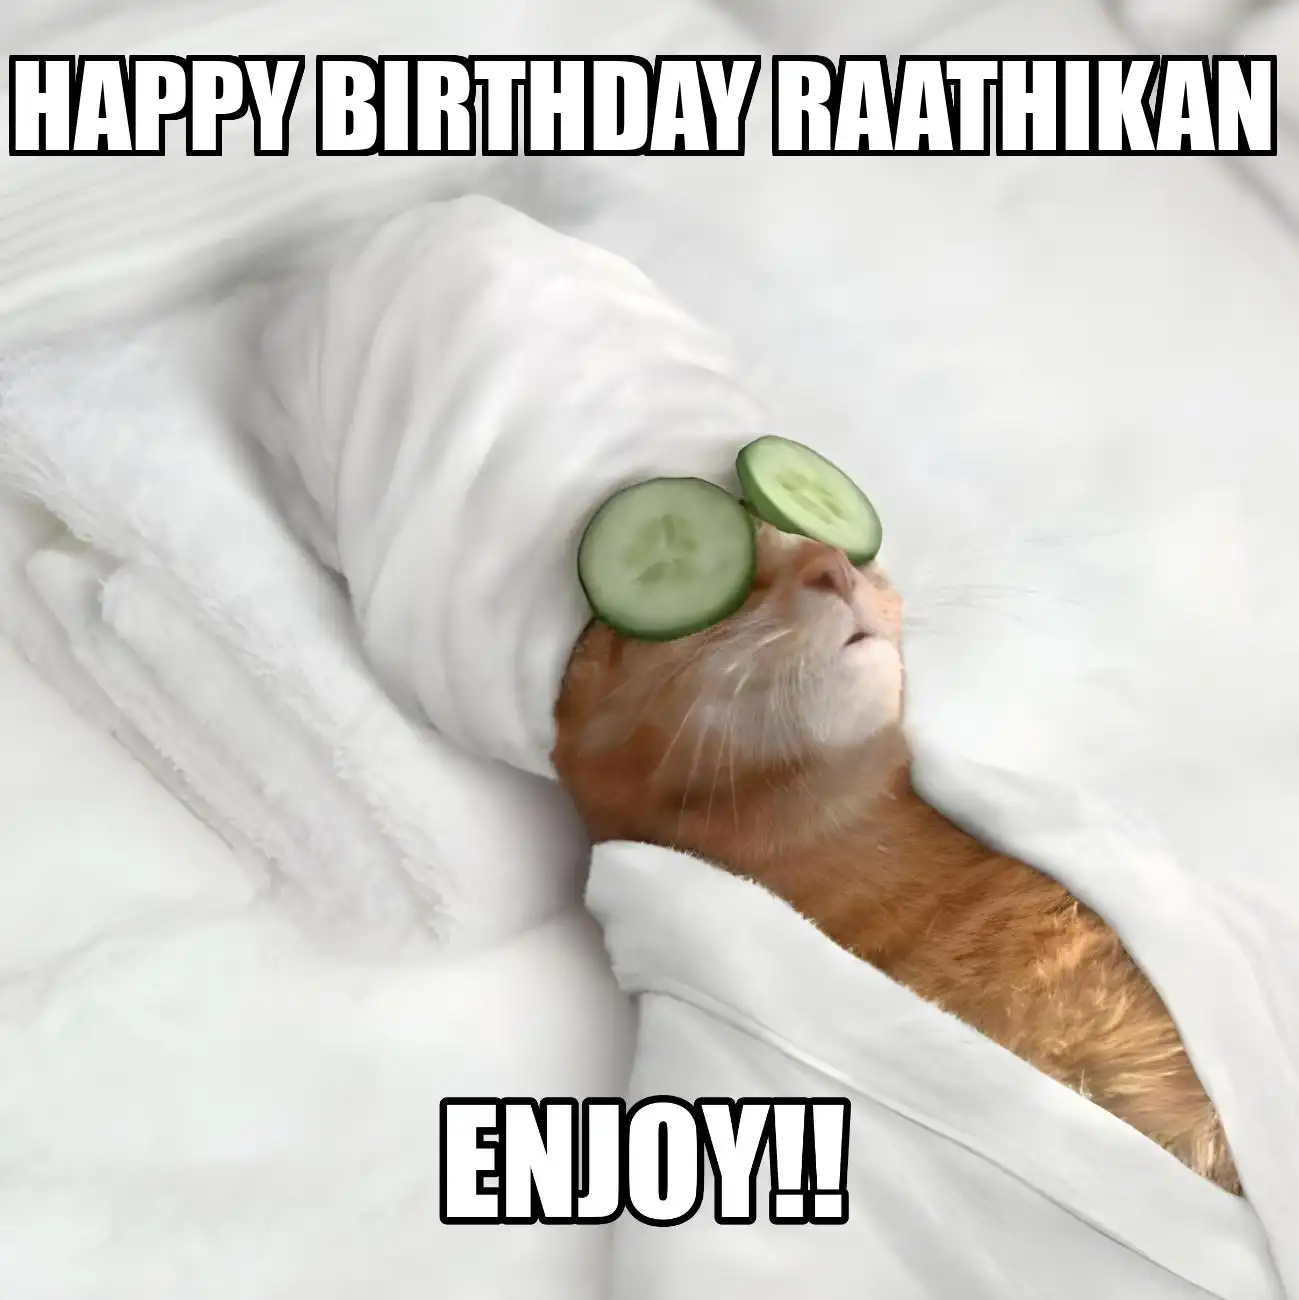 Happy Birthday Raathikan Enjoy Cat Meme